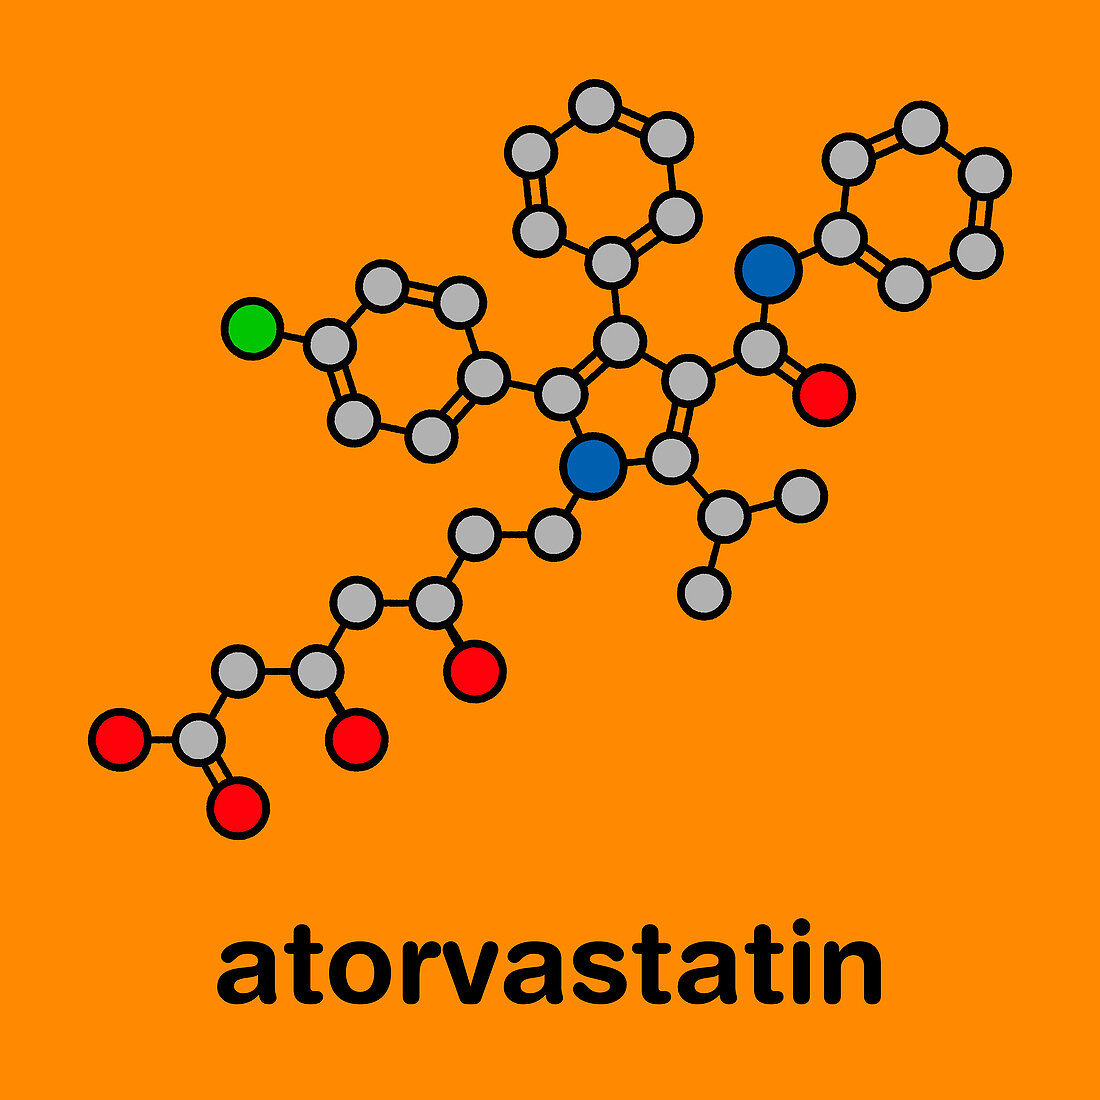 Atorvastatin cholesterol lowering drug, molecular model